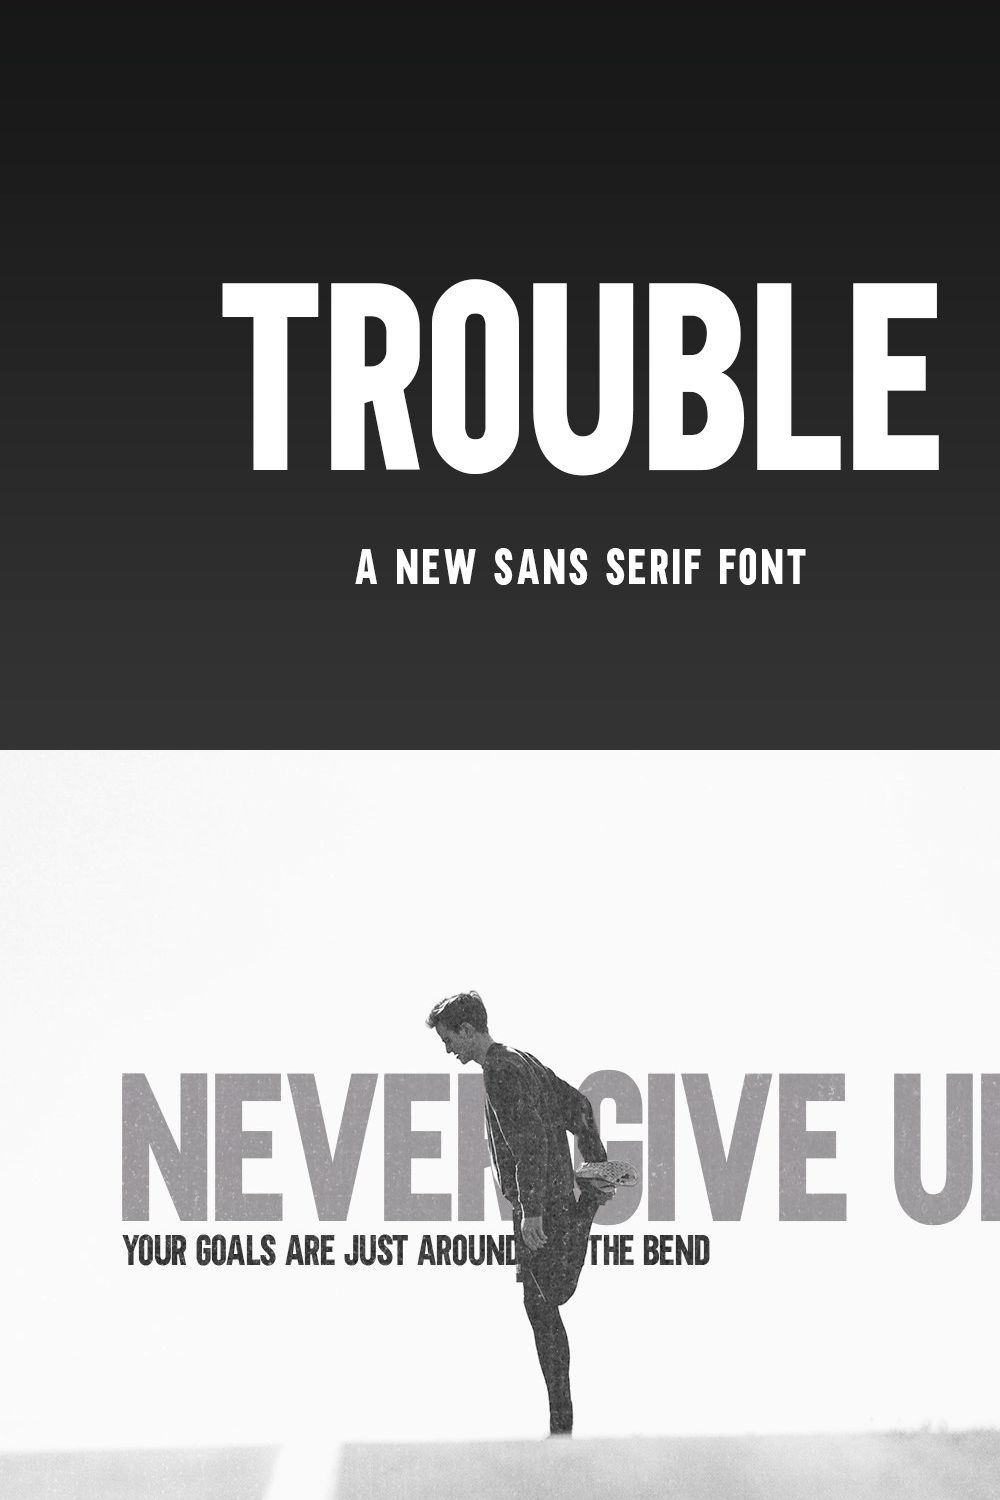 Trouble Font pinterest preview image.